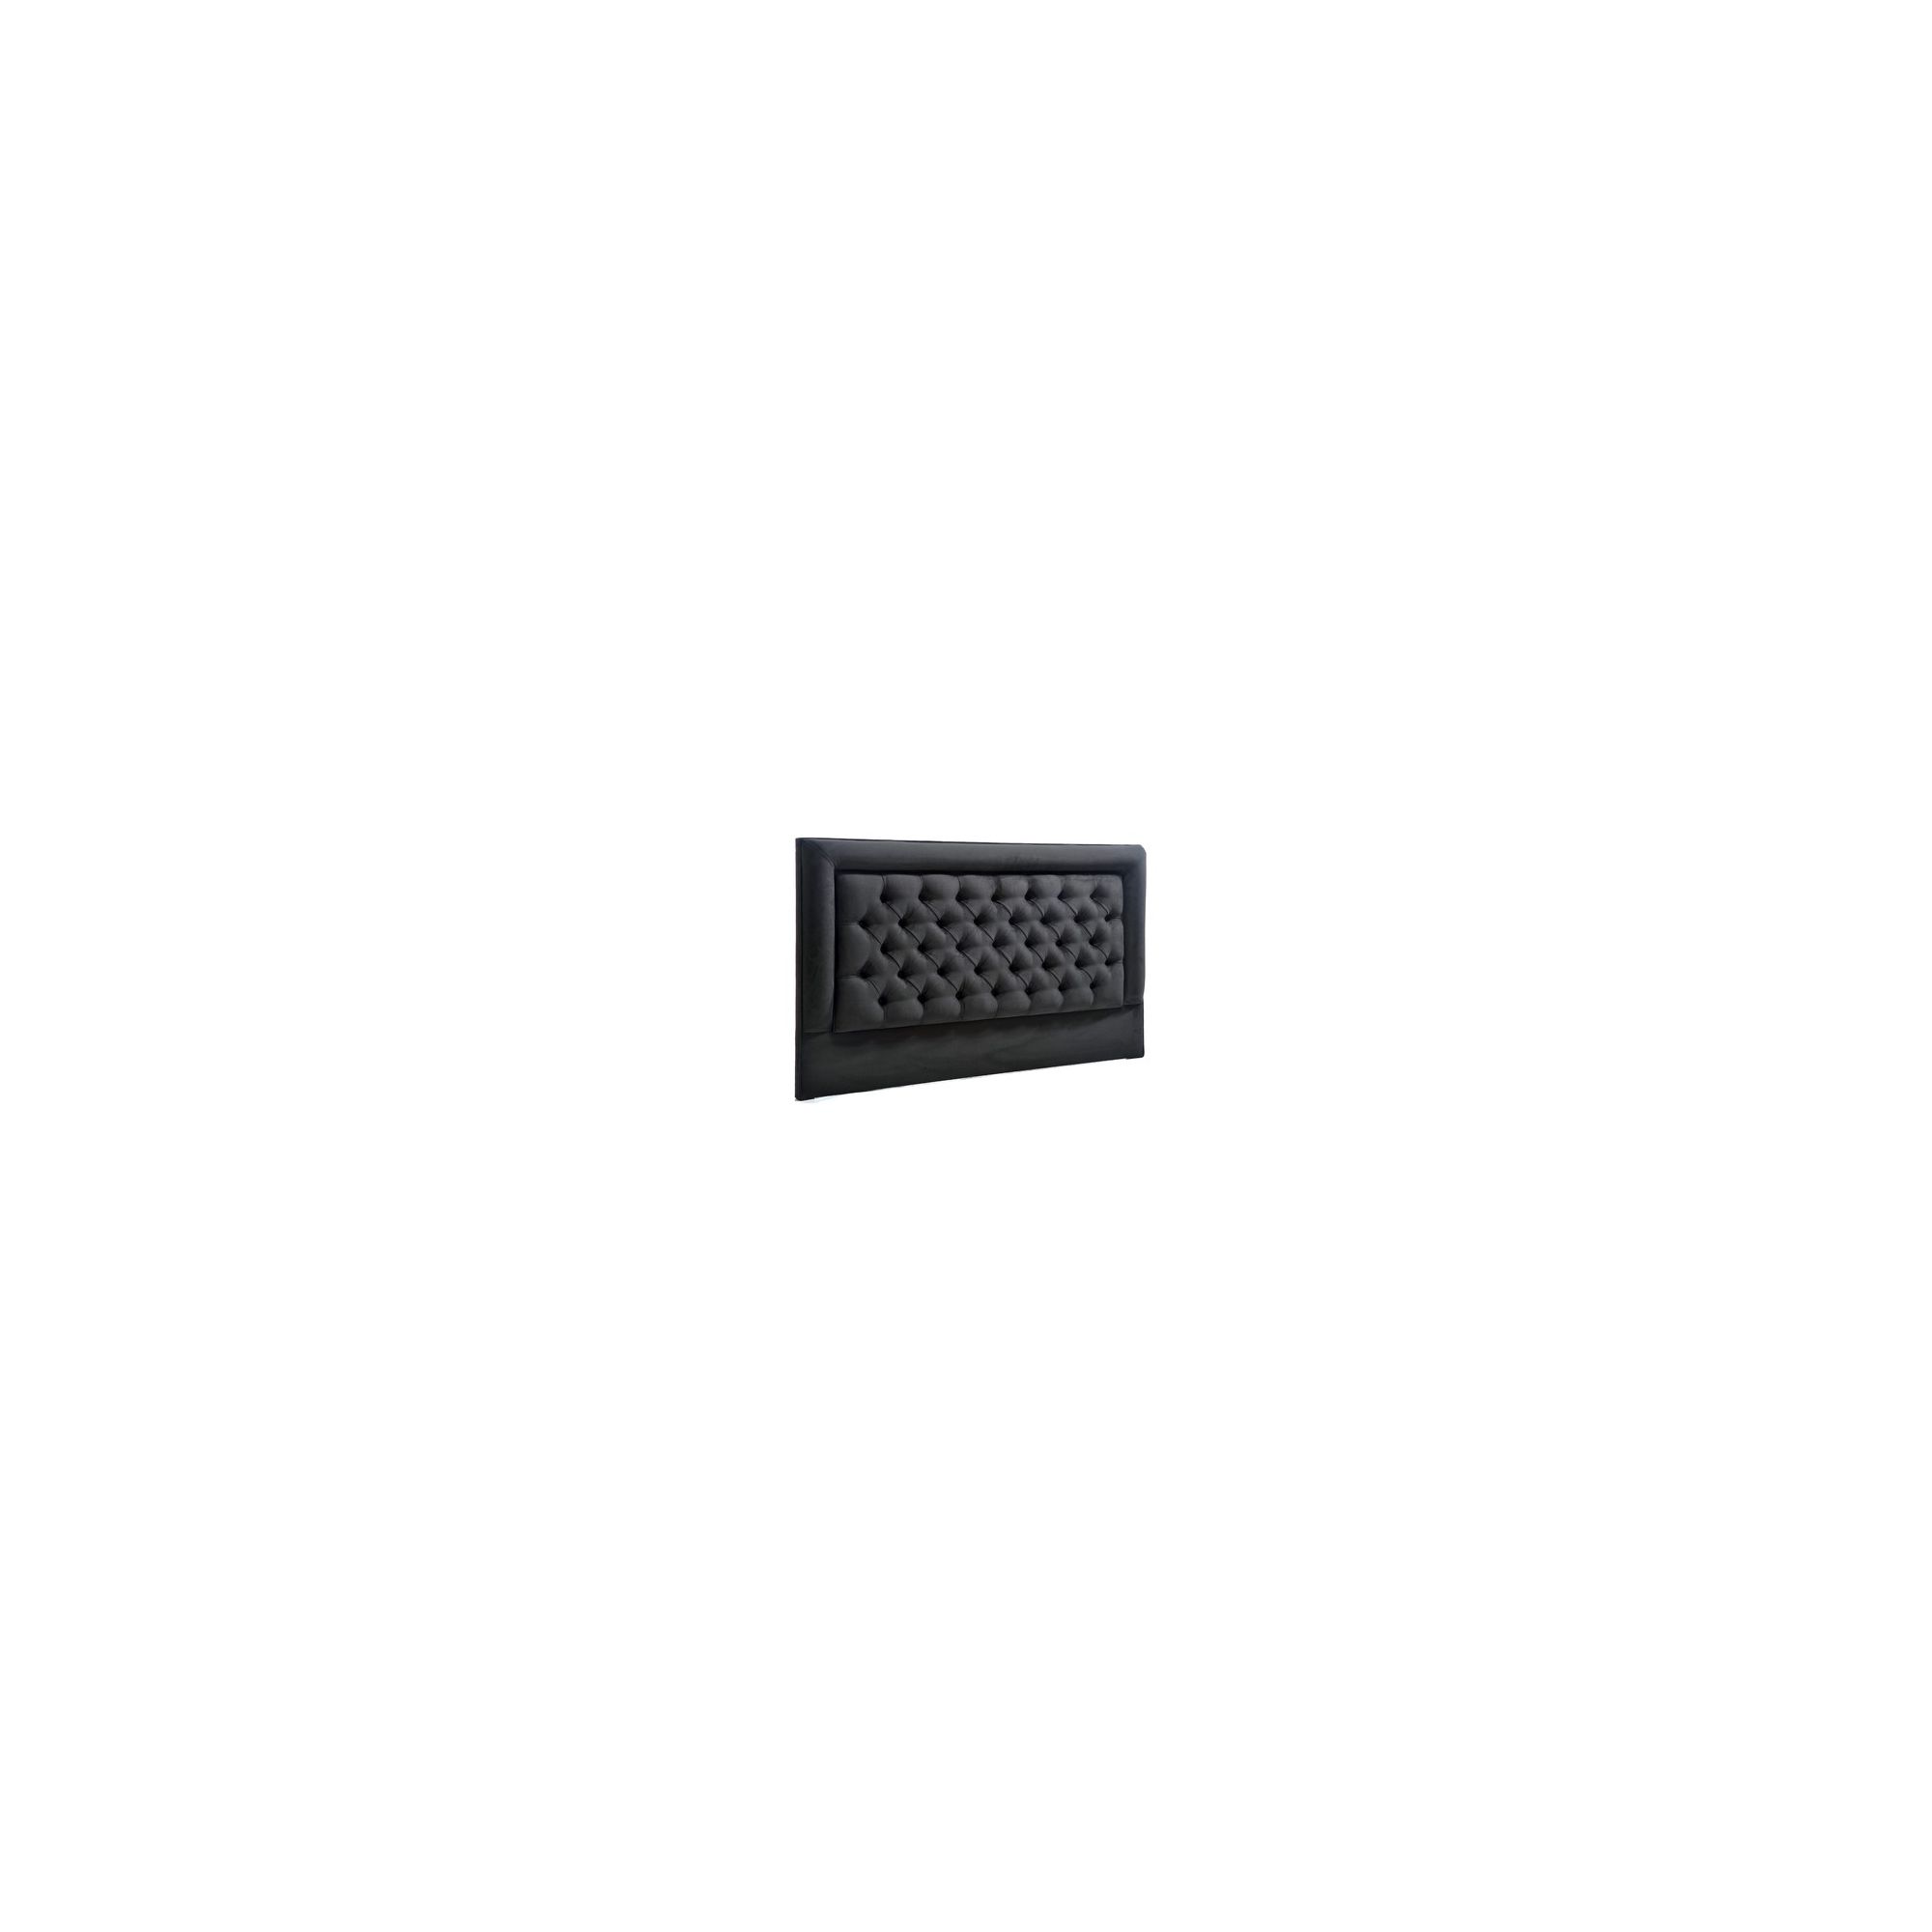 PC Upholstery Brasilia Headboard - Cream - 3' Single at Tesco Direct